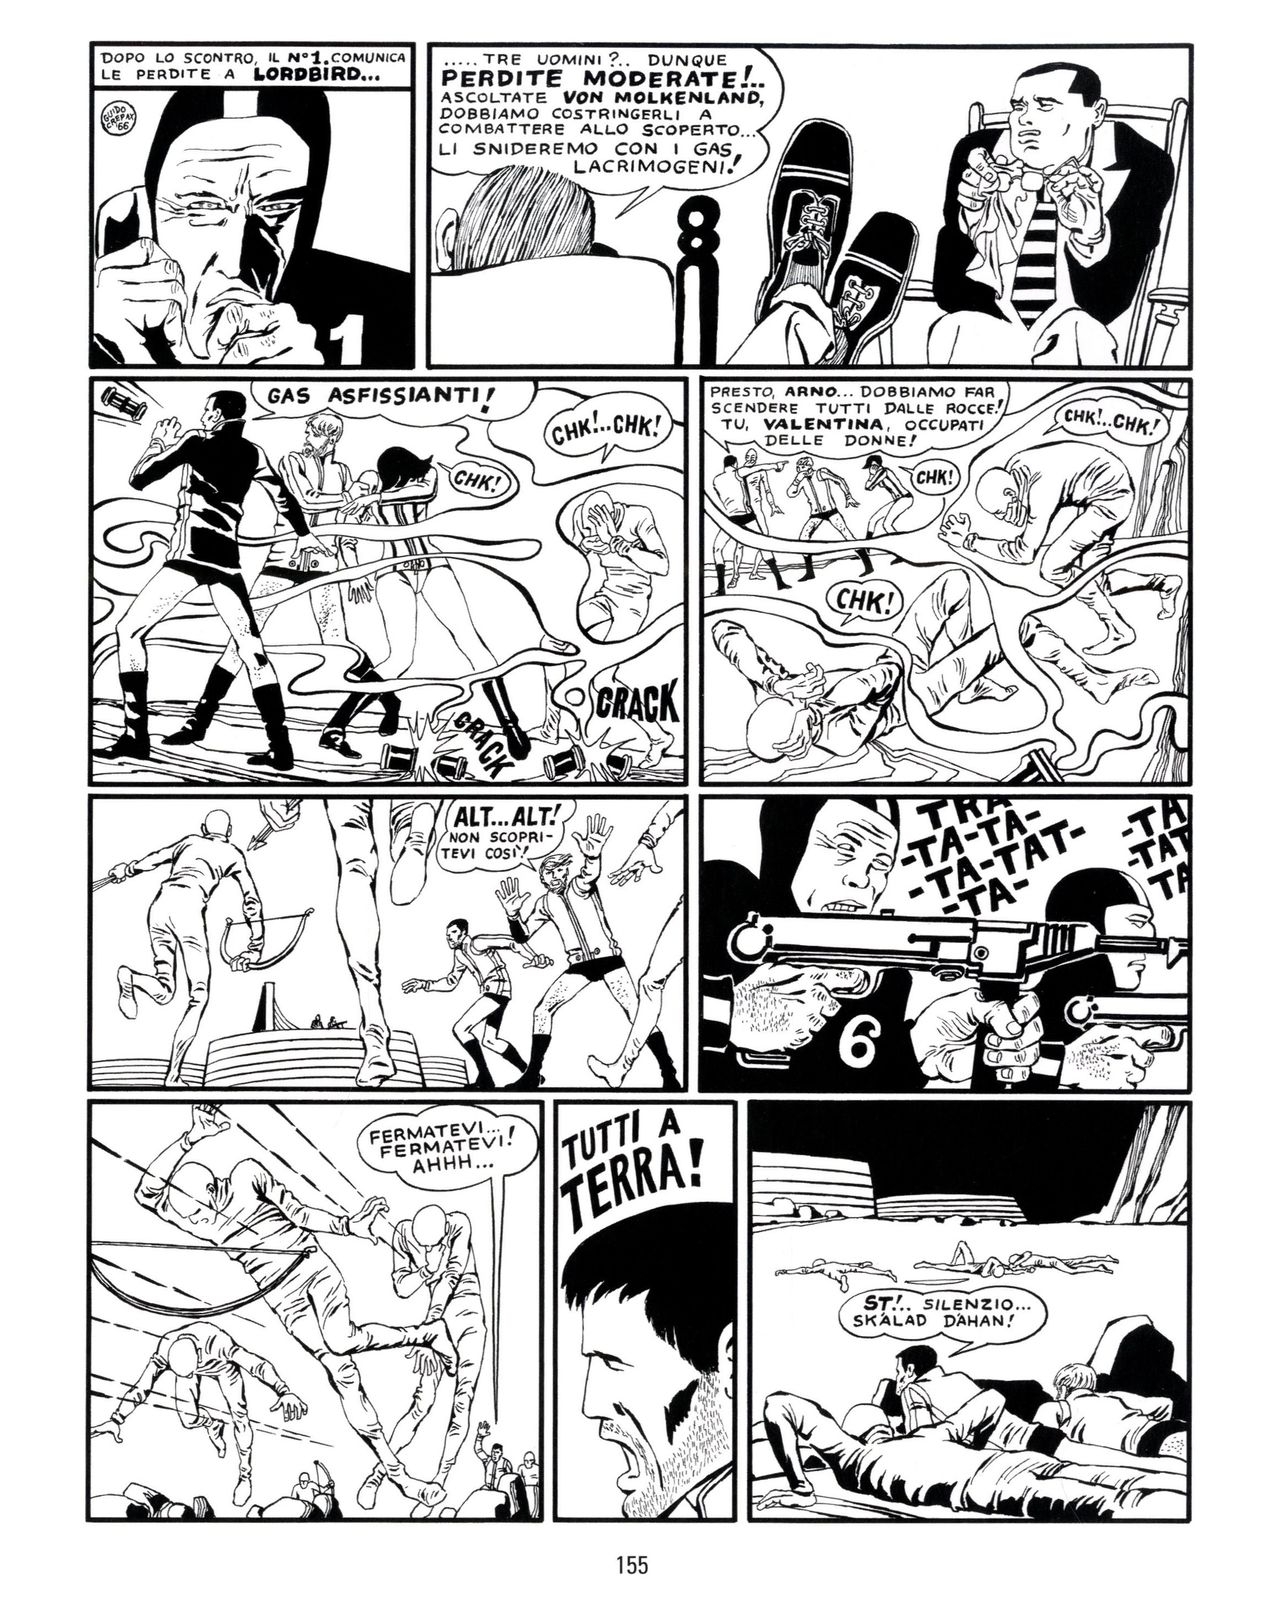 [Guido Crepax] Erotica Fumetti #25 : L'ascesa dei sotterranei : I cavalieri ciechi [Italian] 156